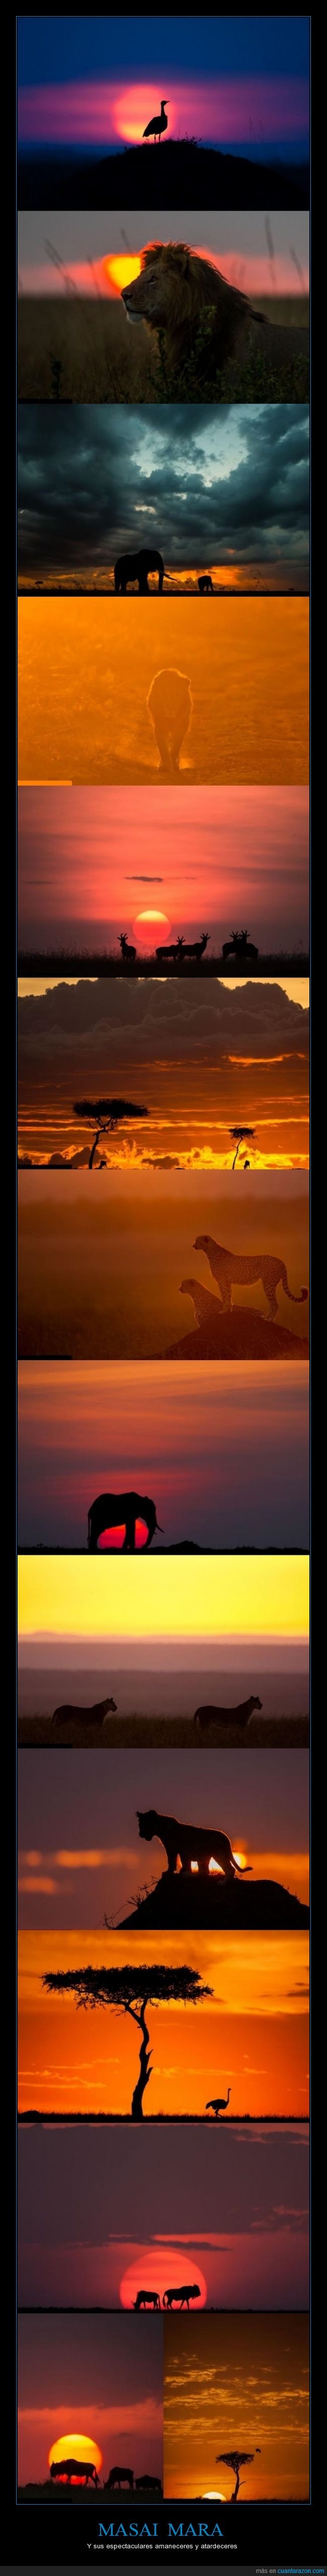 Masai Mara,África,Paul Goldstein,amaneceres,atardeceres,impresionante,animales,elefante,avestruz,ñu,león,gacela,guepardo